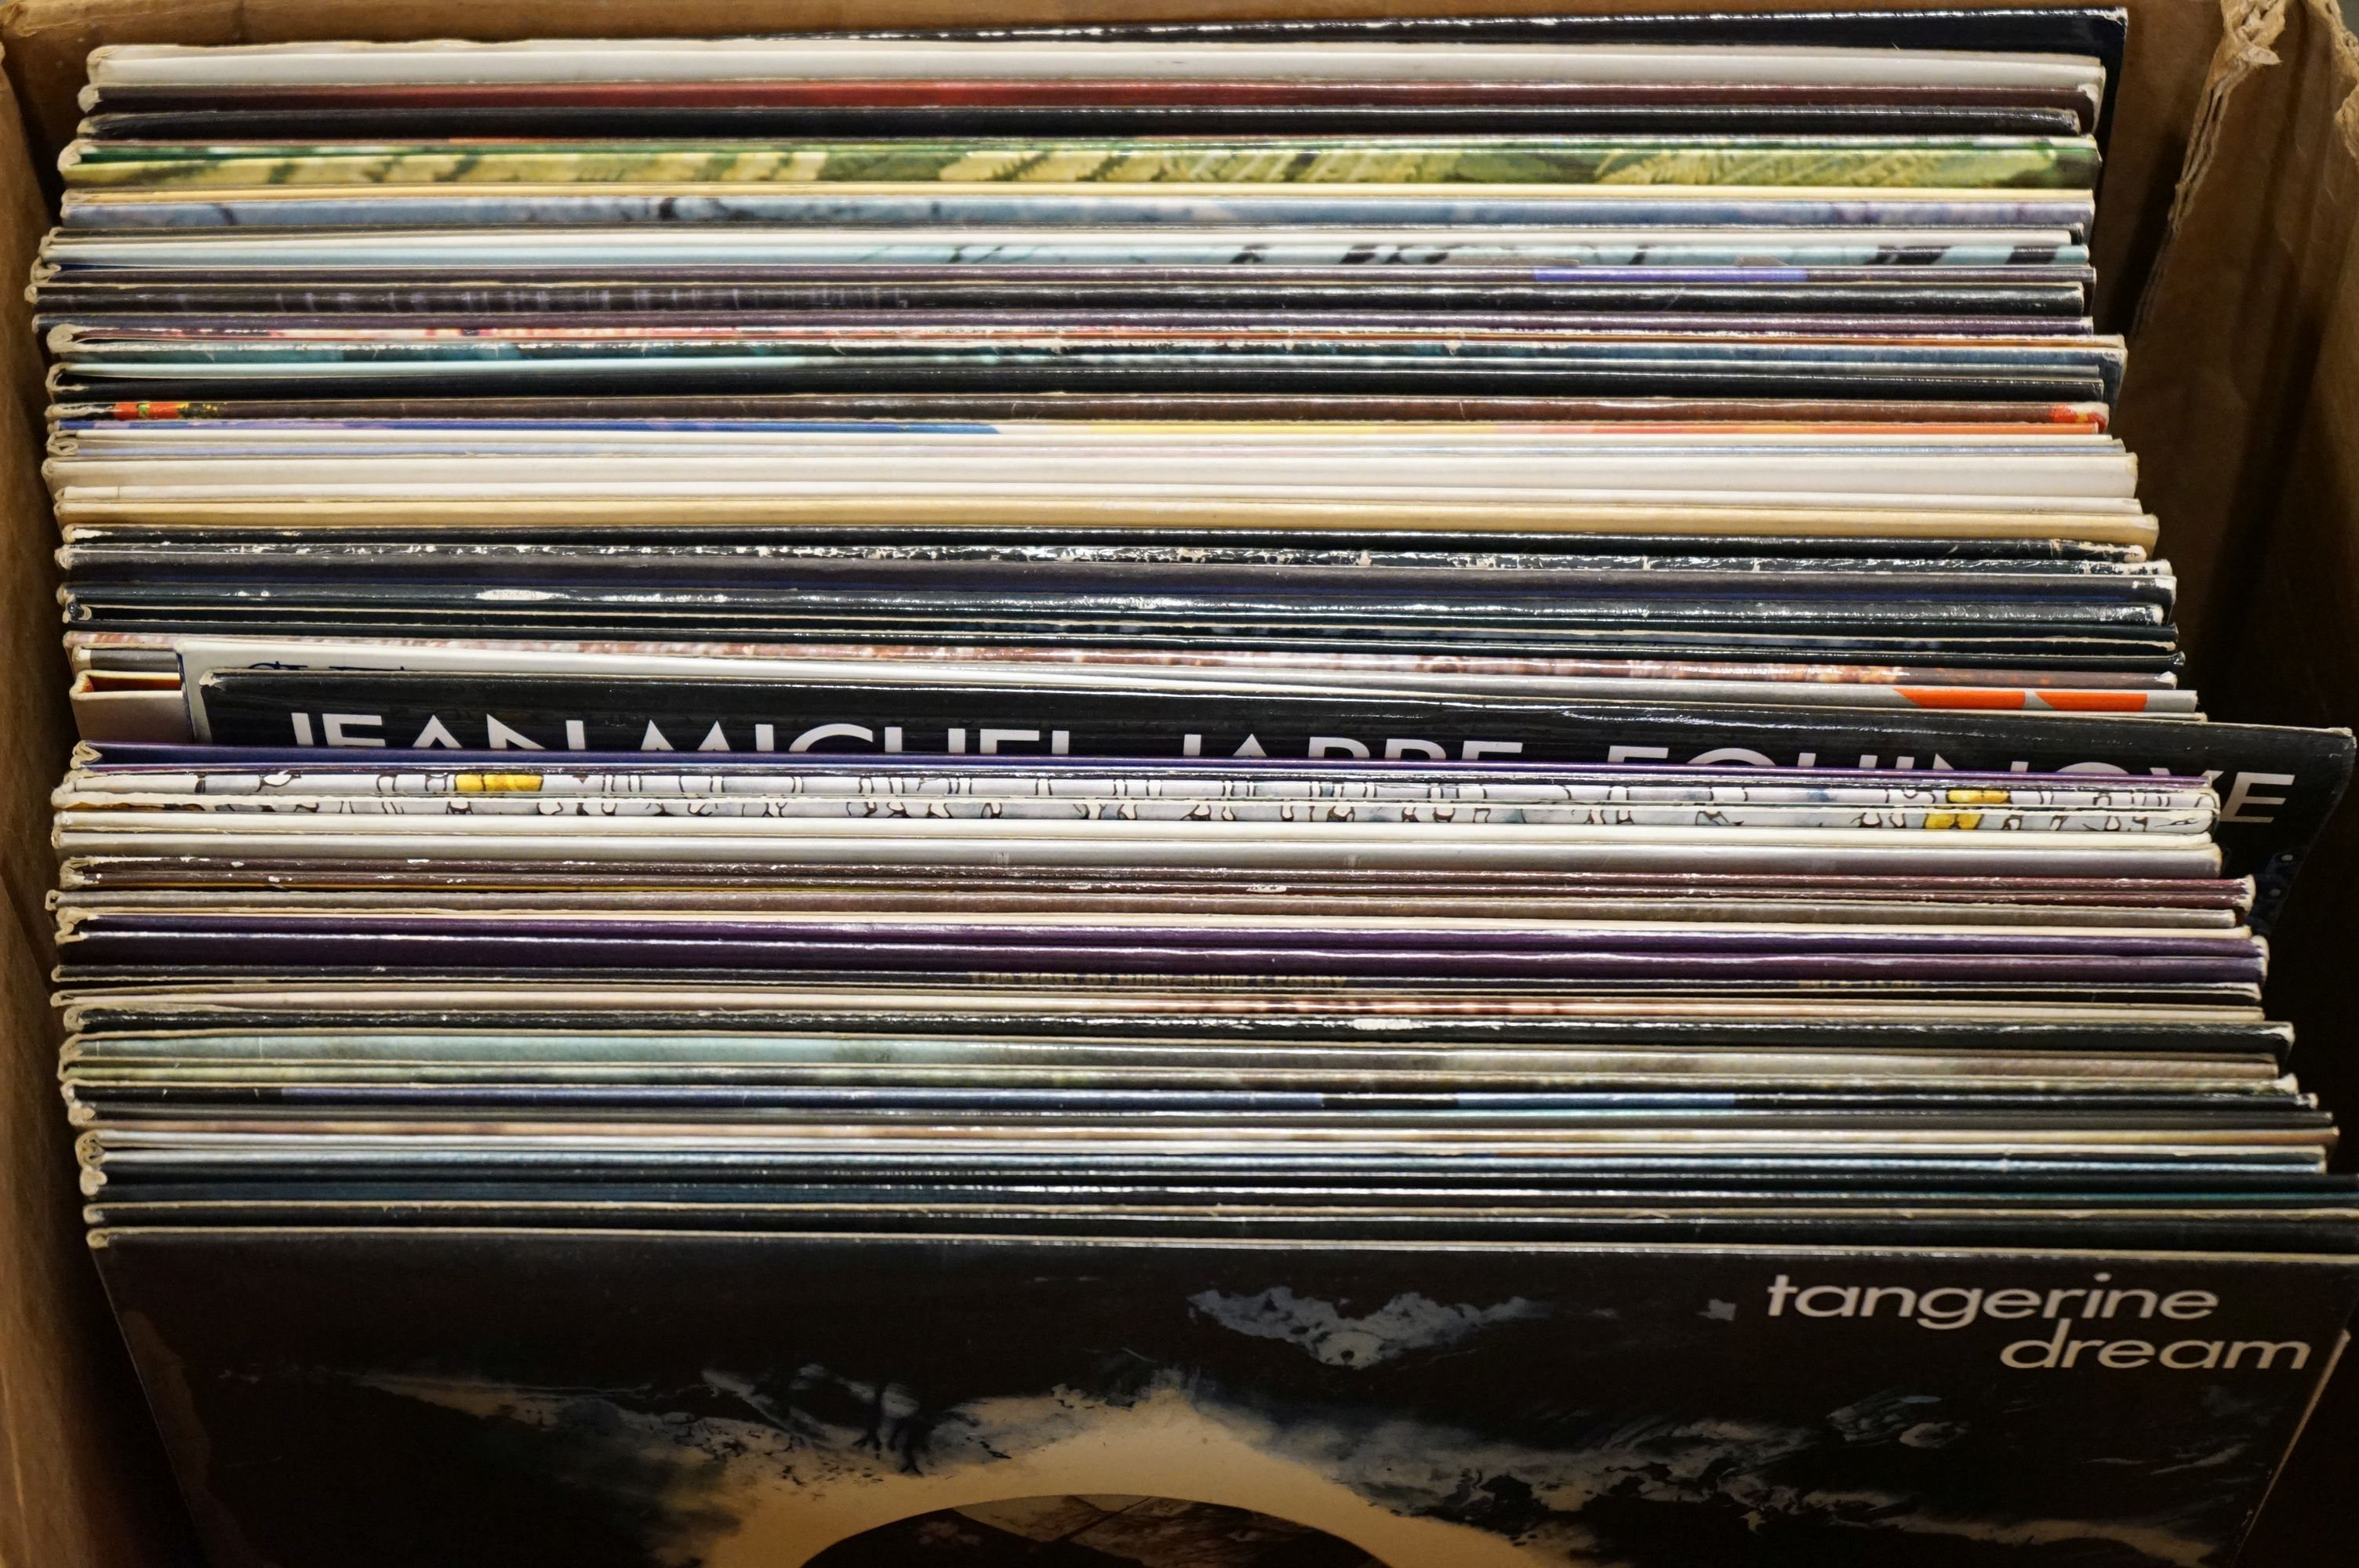 Vinyl - Over 65 pop & rock LPs including The Rolling Stones, The Beatles, Tangerine Dream, Rick - Image 4 of 4